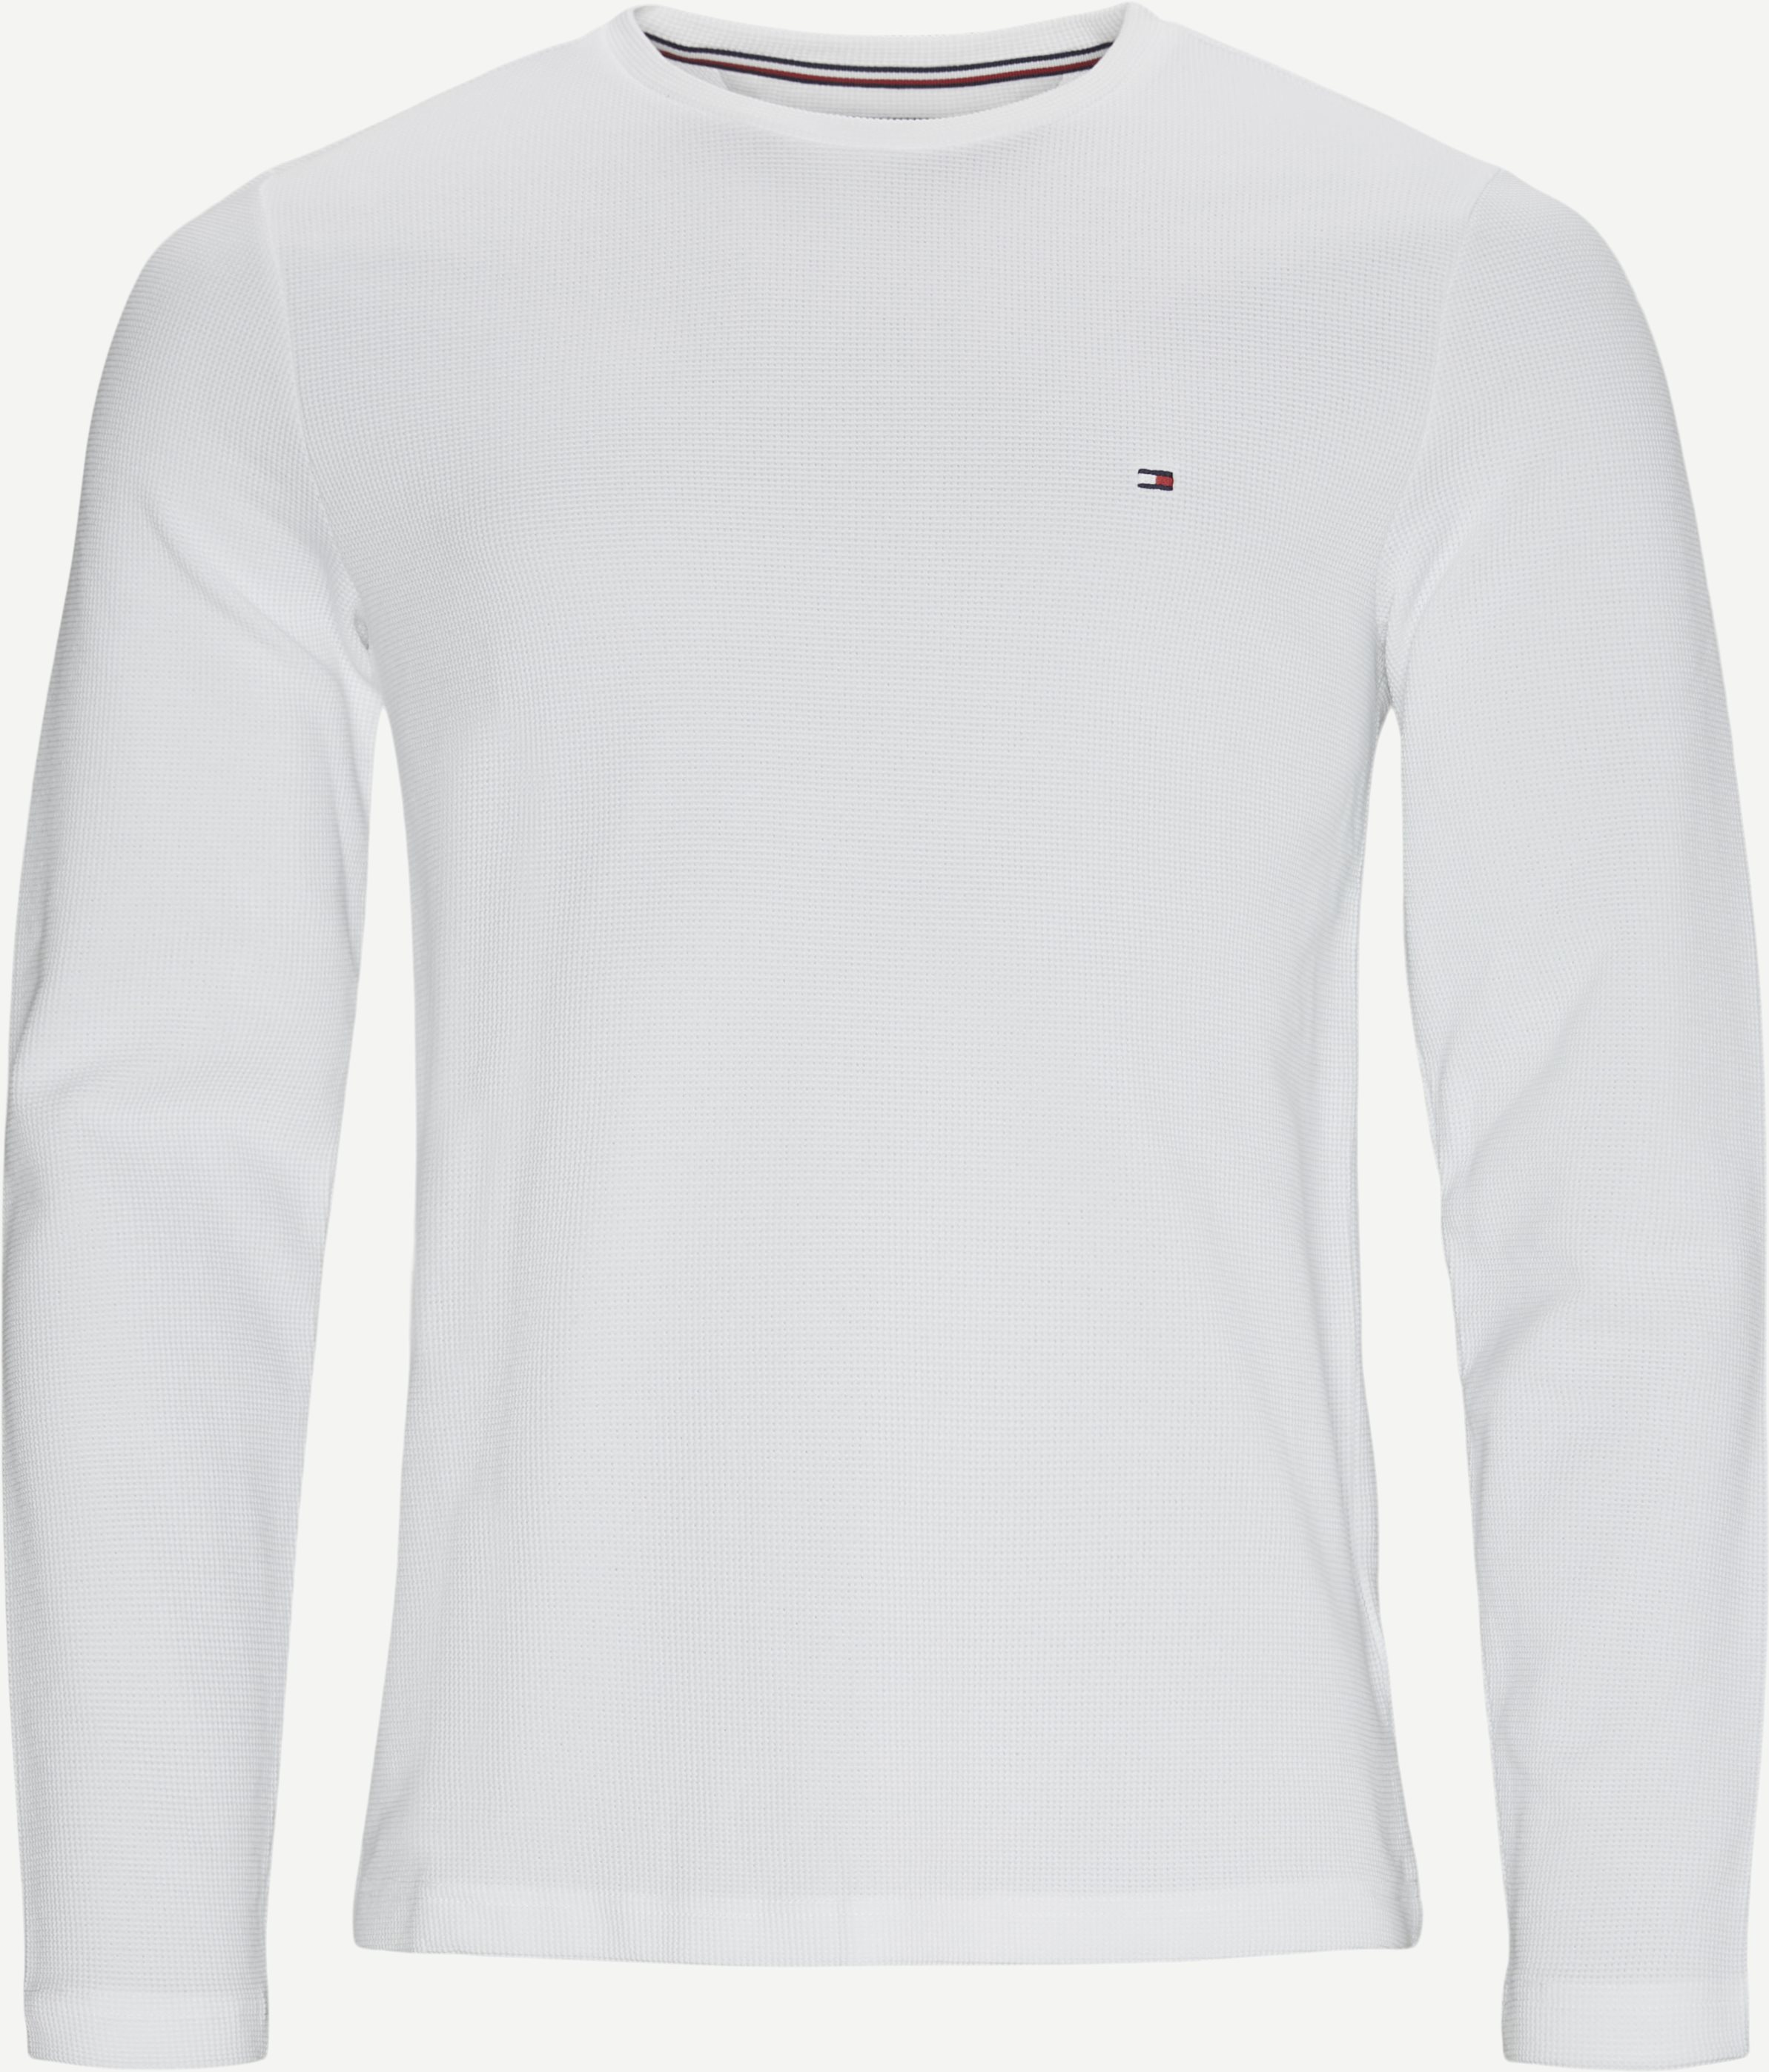 Waffle Long Sleeve T-shirt - T-shirts - Regular fit - White